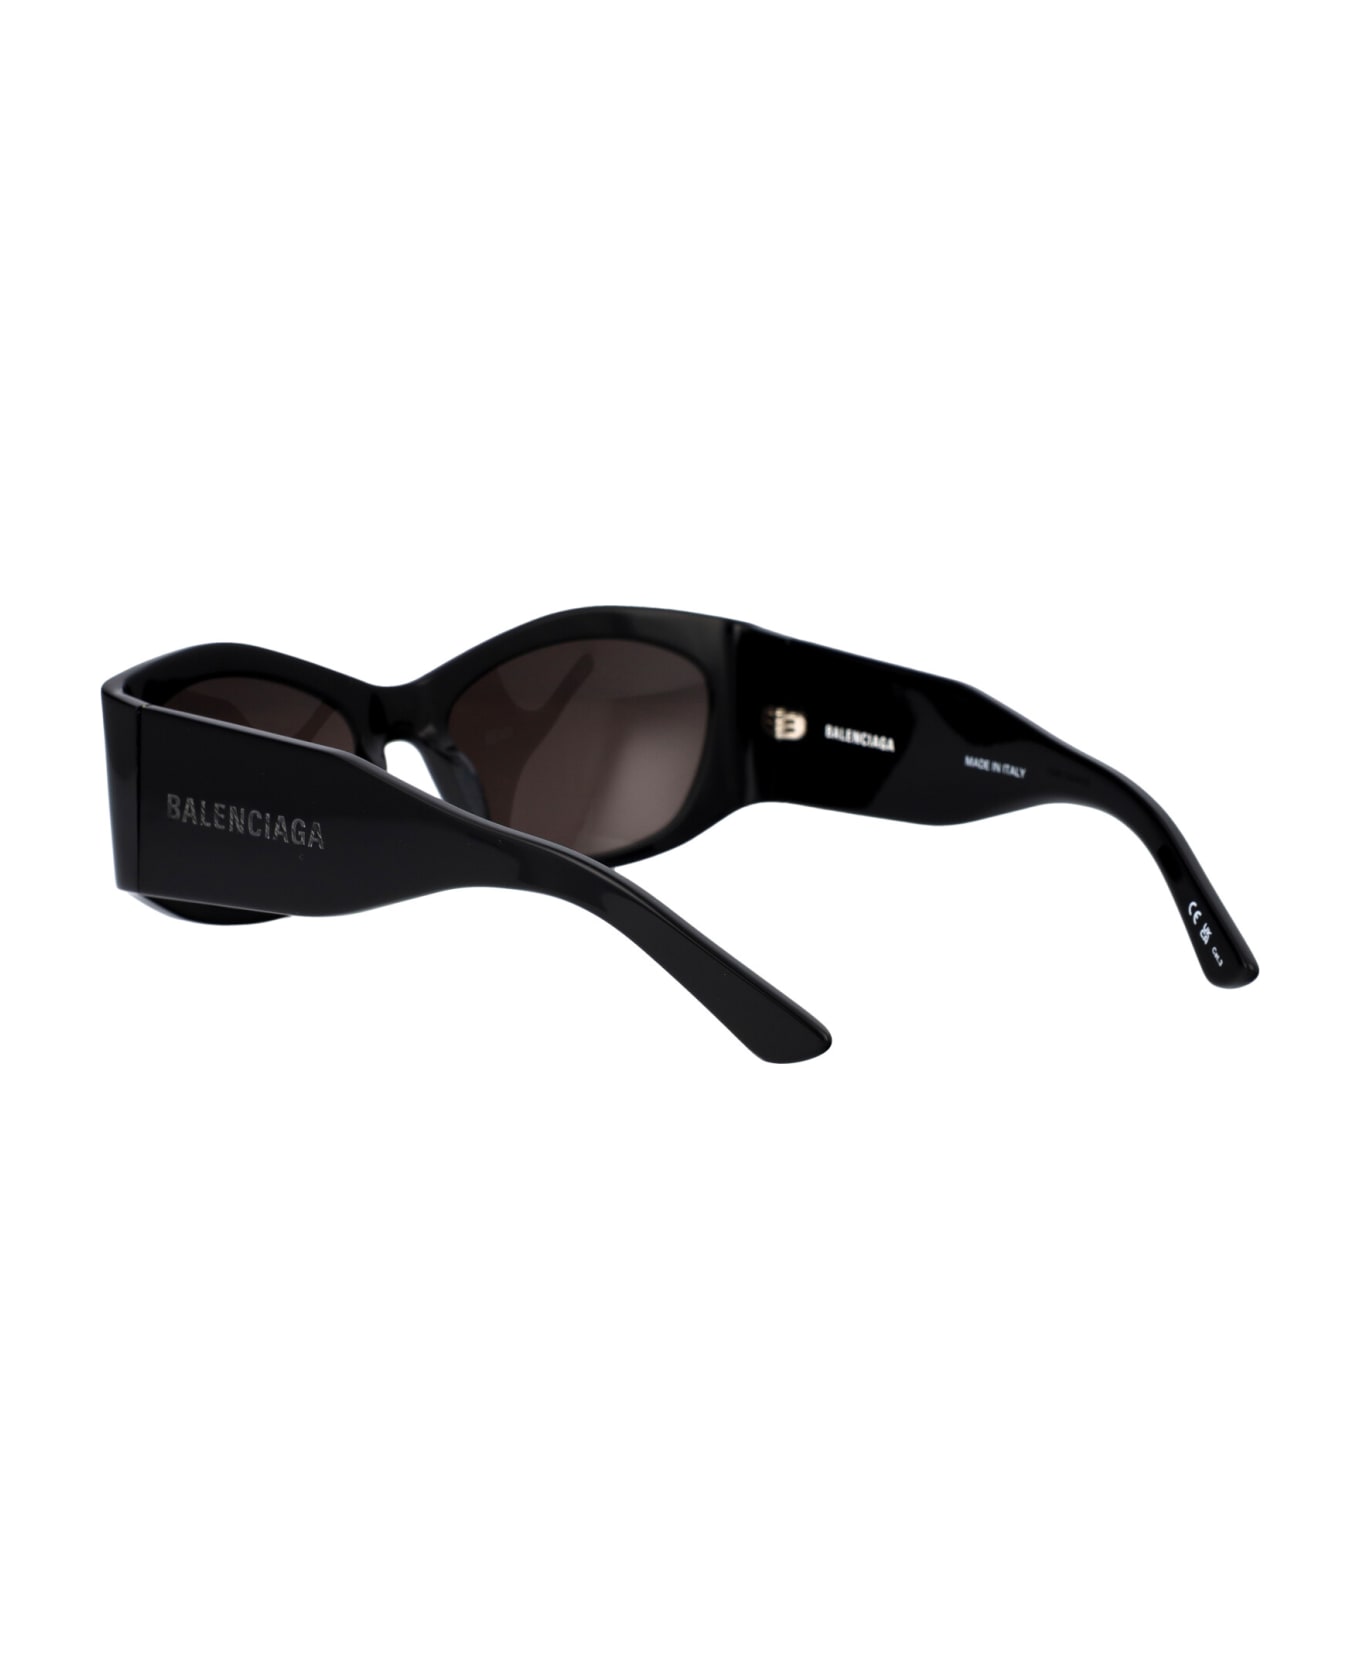 Balenciaga Eyewear Bb0329s Sunglasses - 001 BLACK BLACK GREY